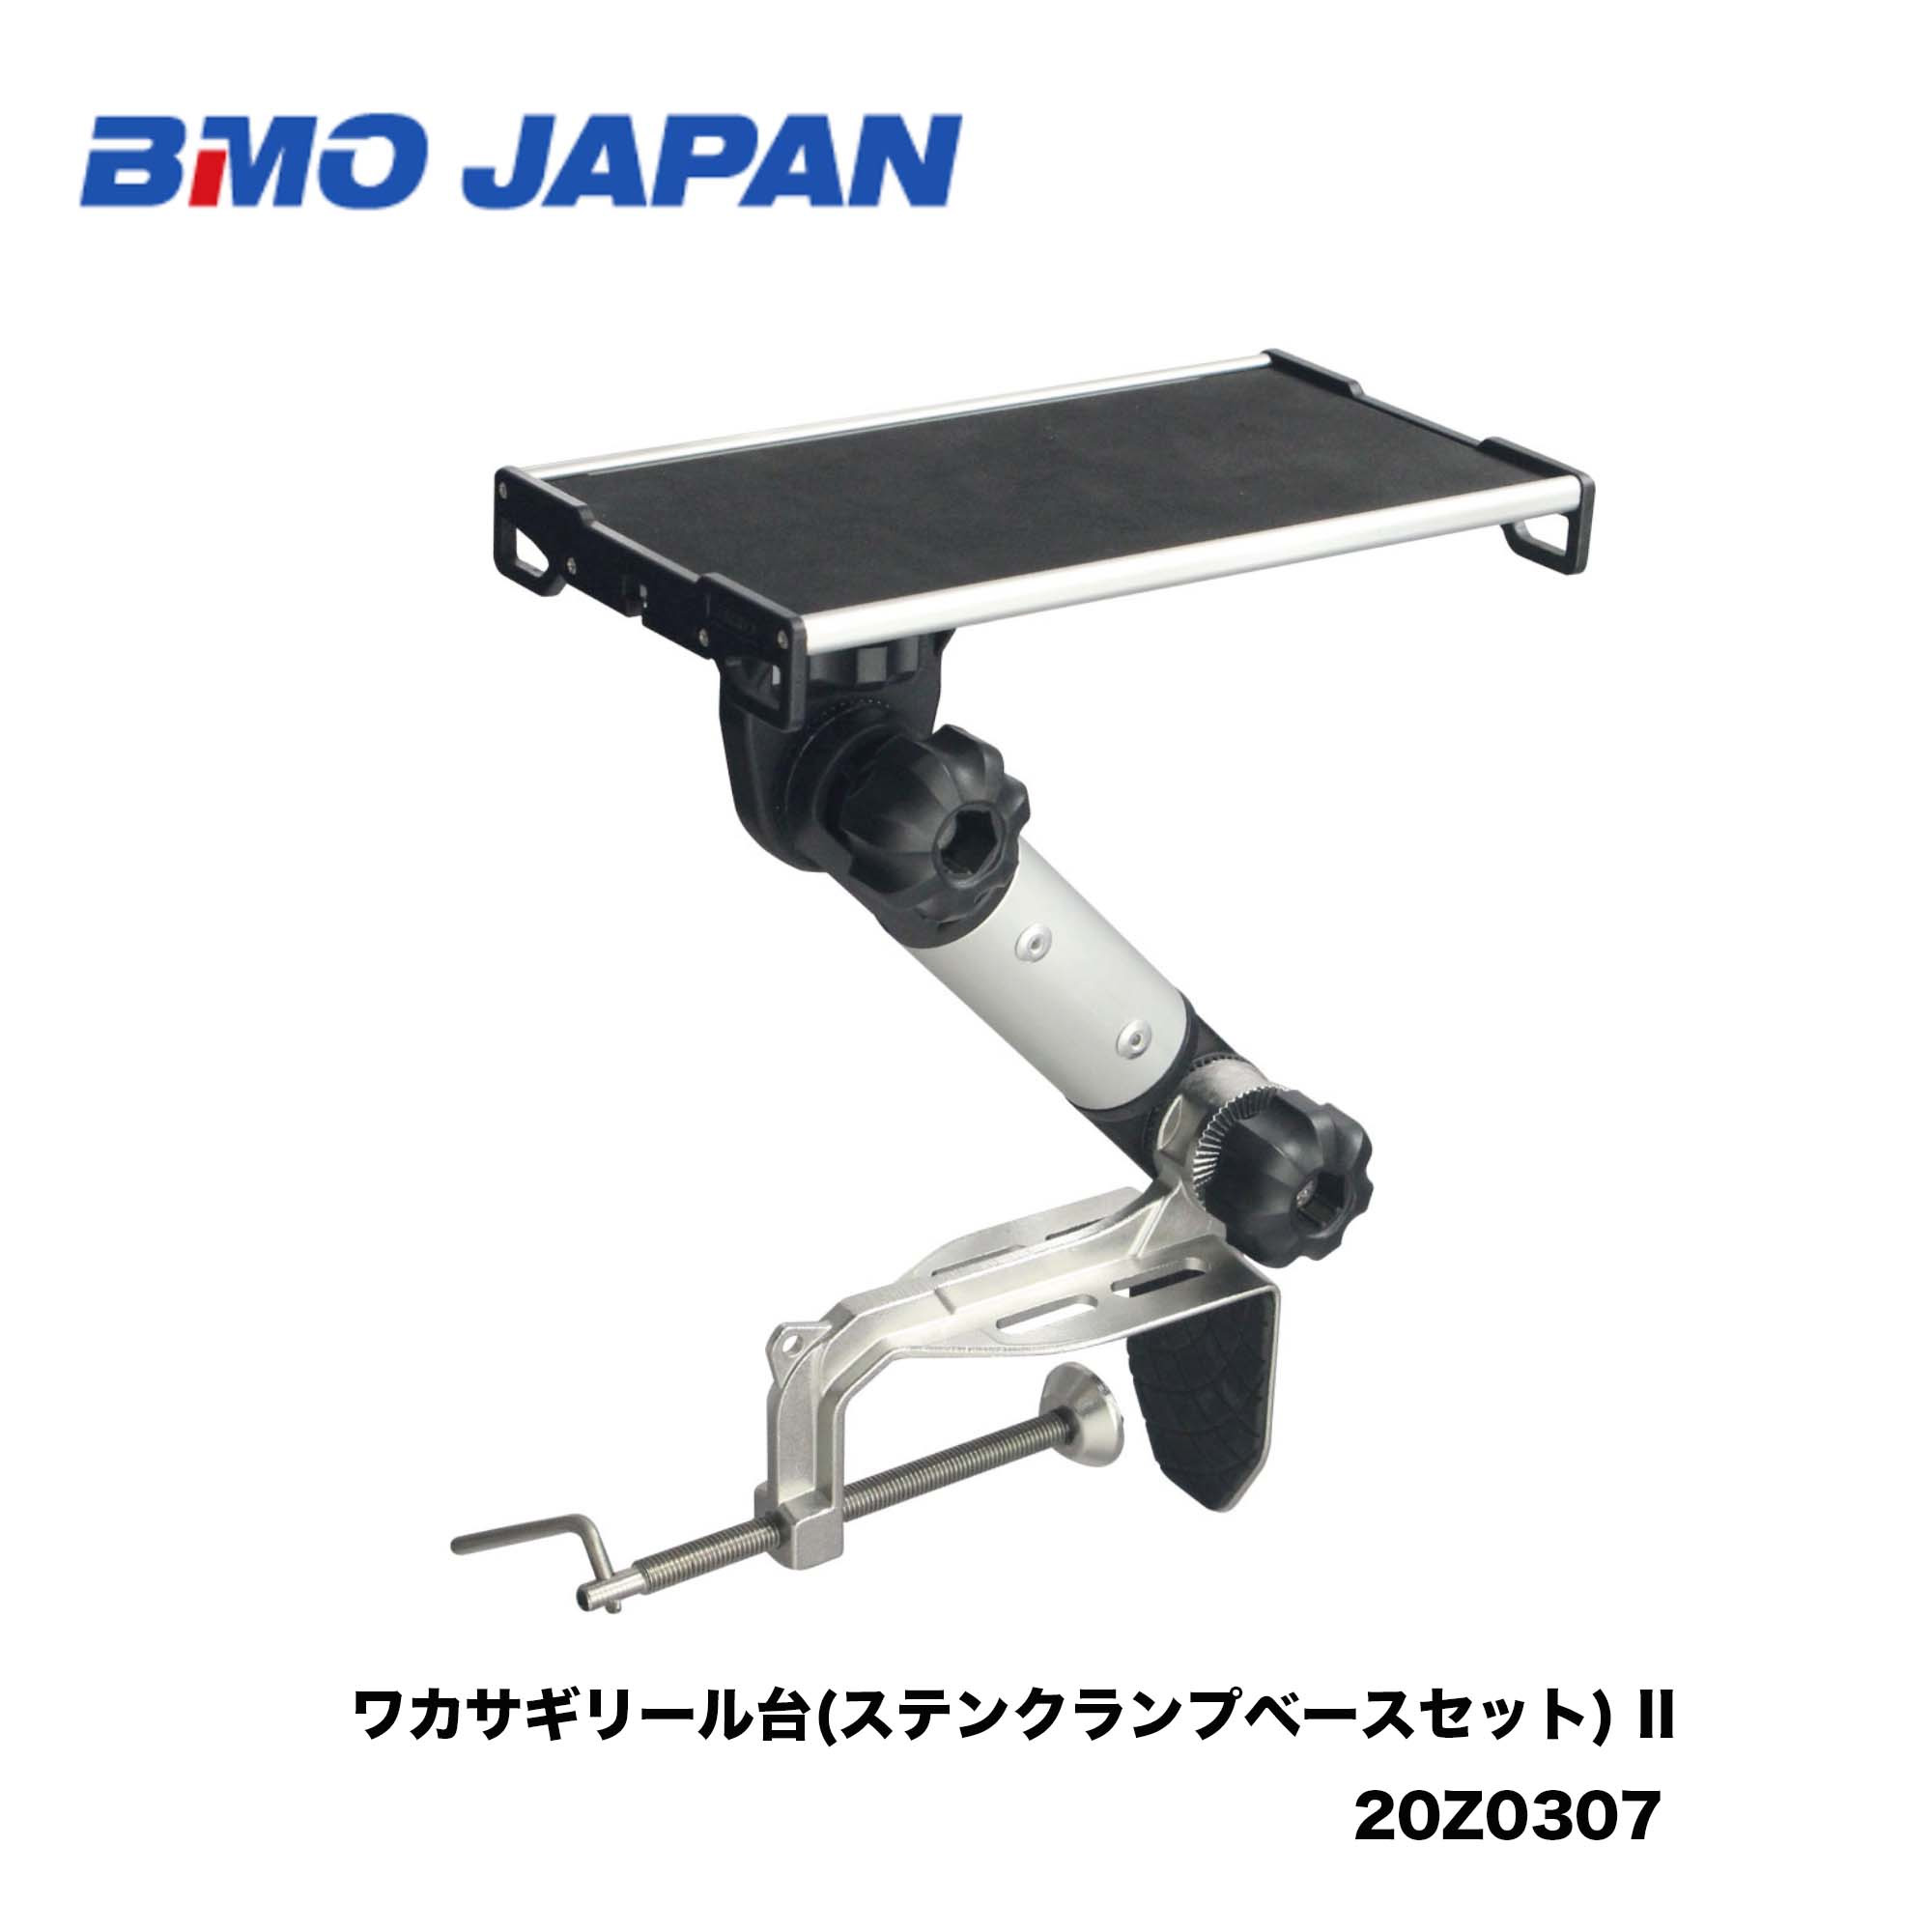 BMO JAPAN(ビーエムオージャパン) ワカサギリール台(置き型) 2 20Z0305